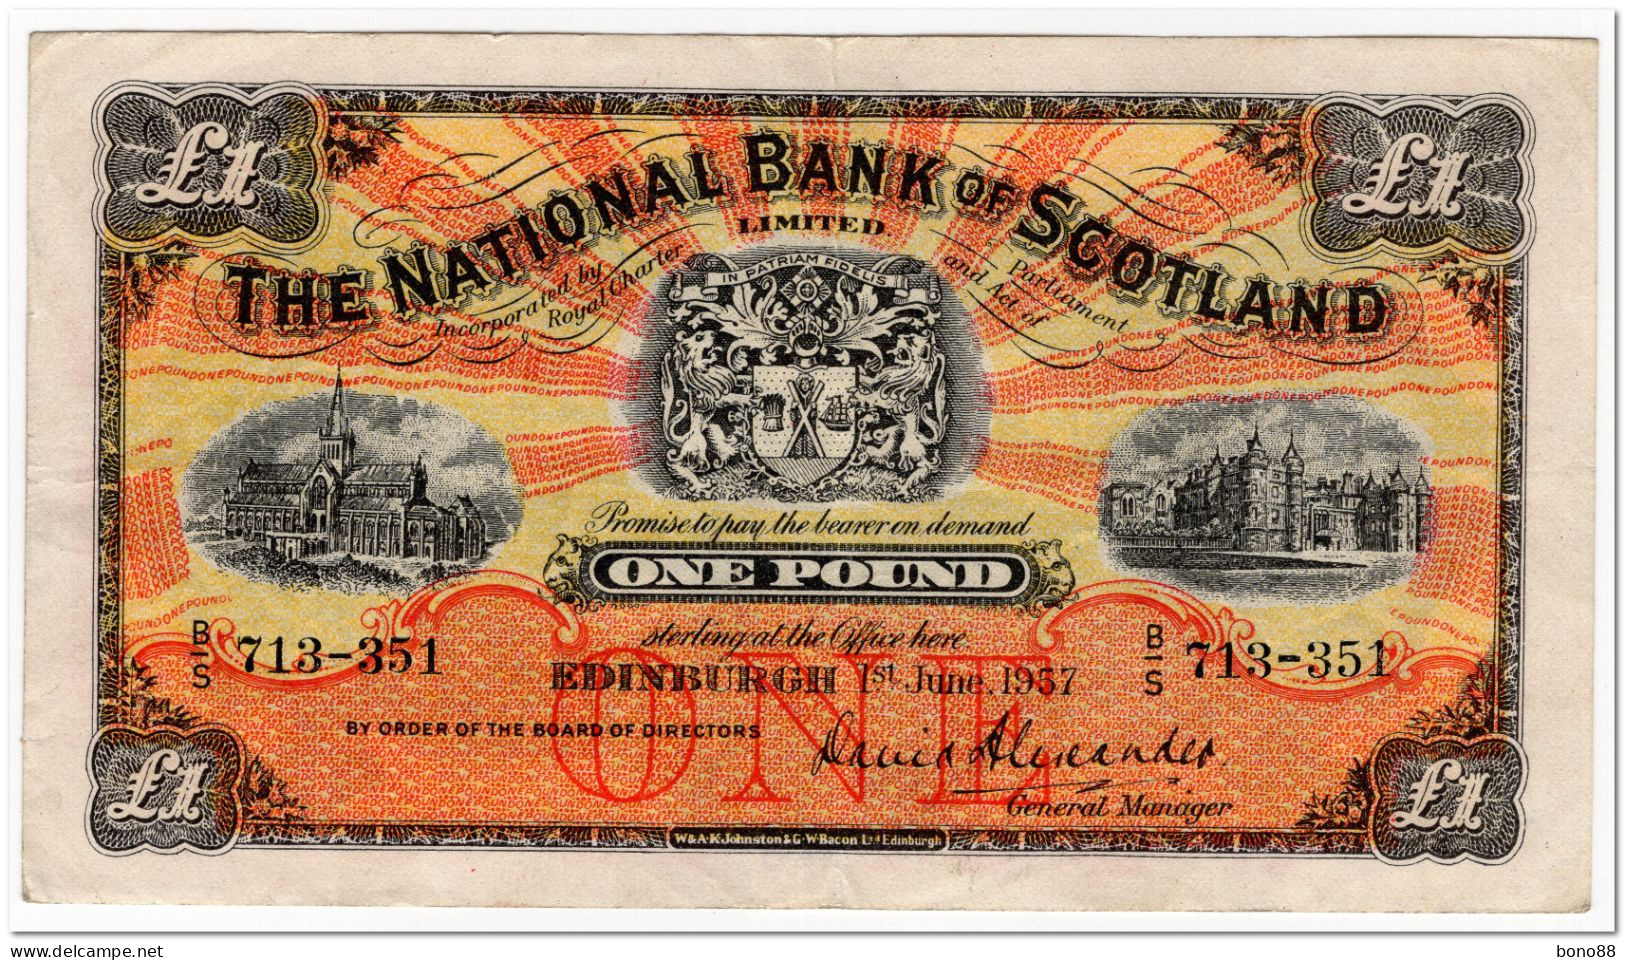 SCOTLAND,THE NATIONAL BANK OF SCOTLAND,1 POUND,1957,P.258c,VF++ - 1 Pond